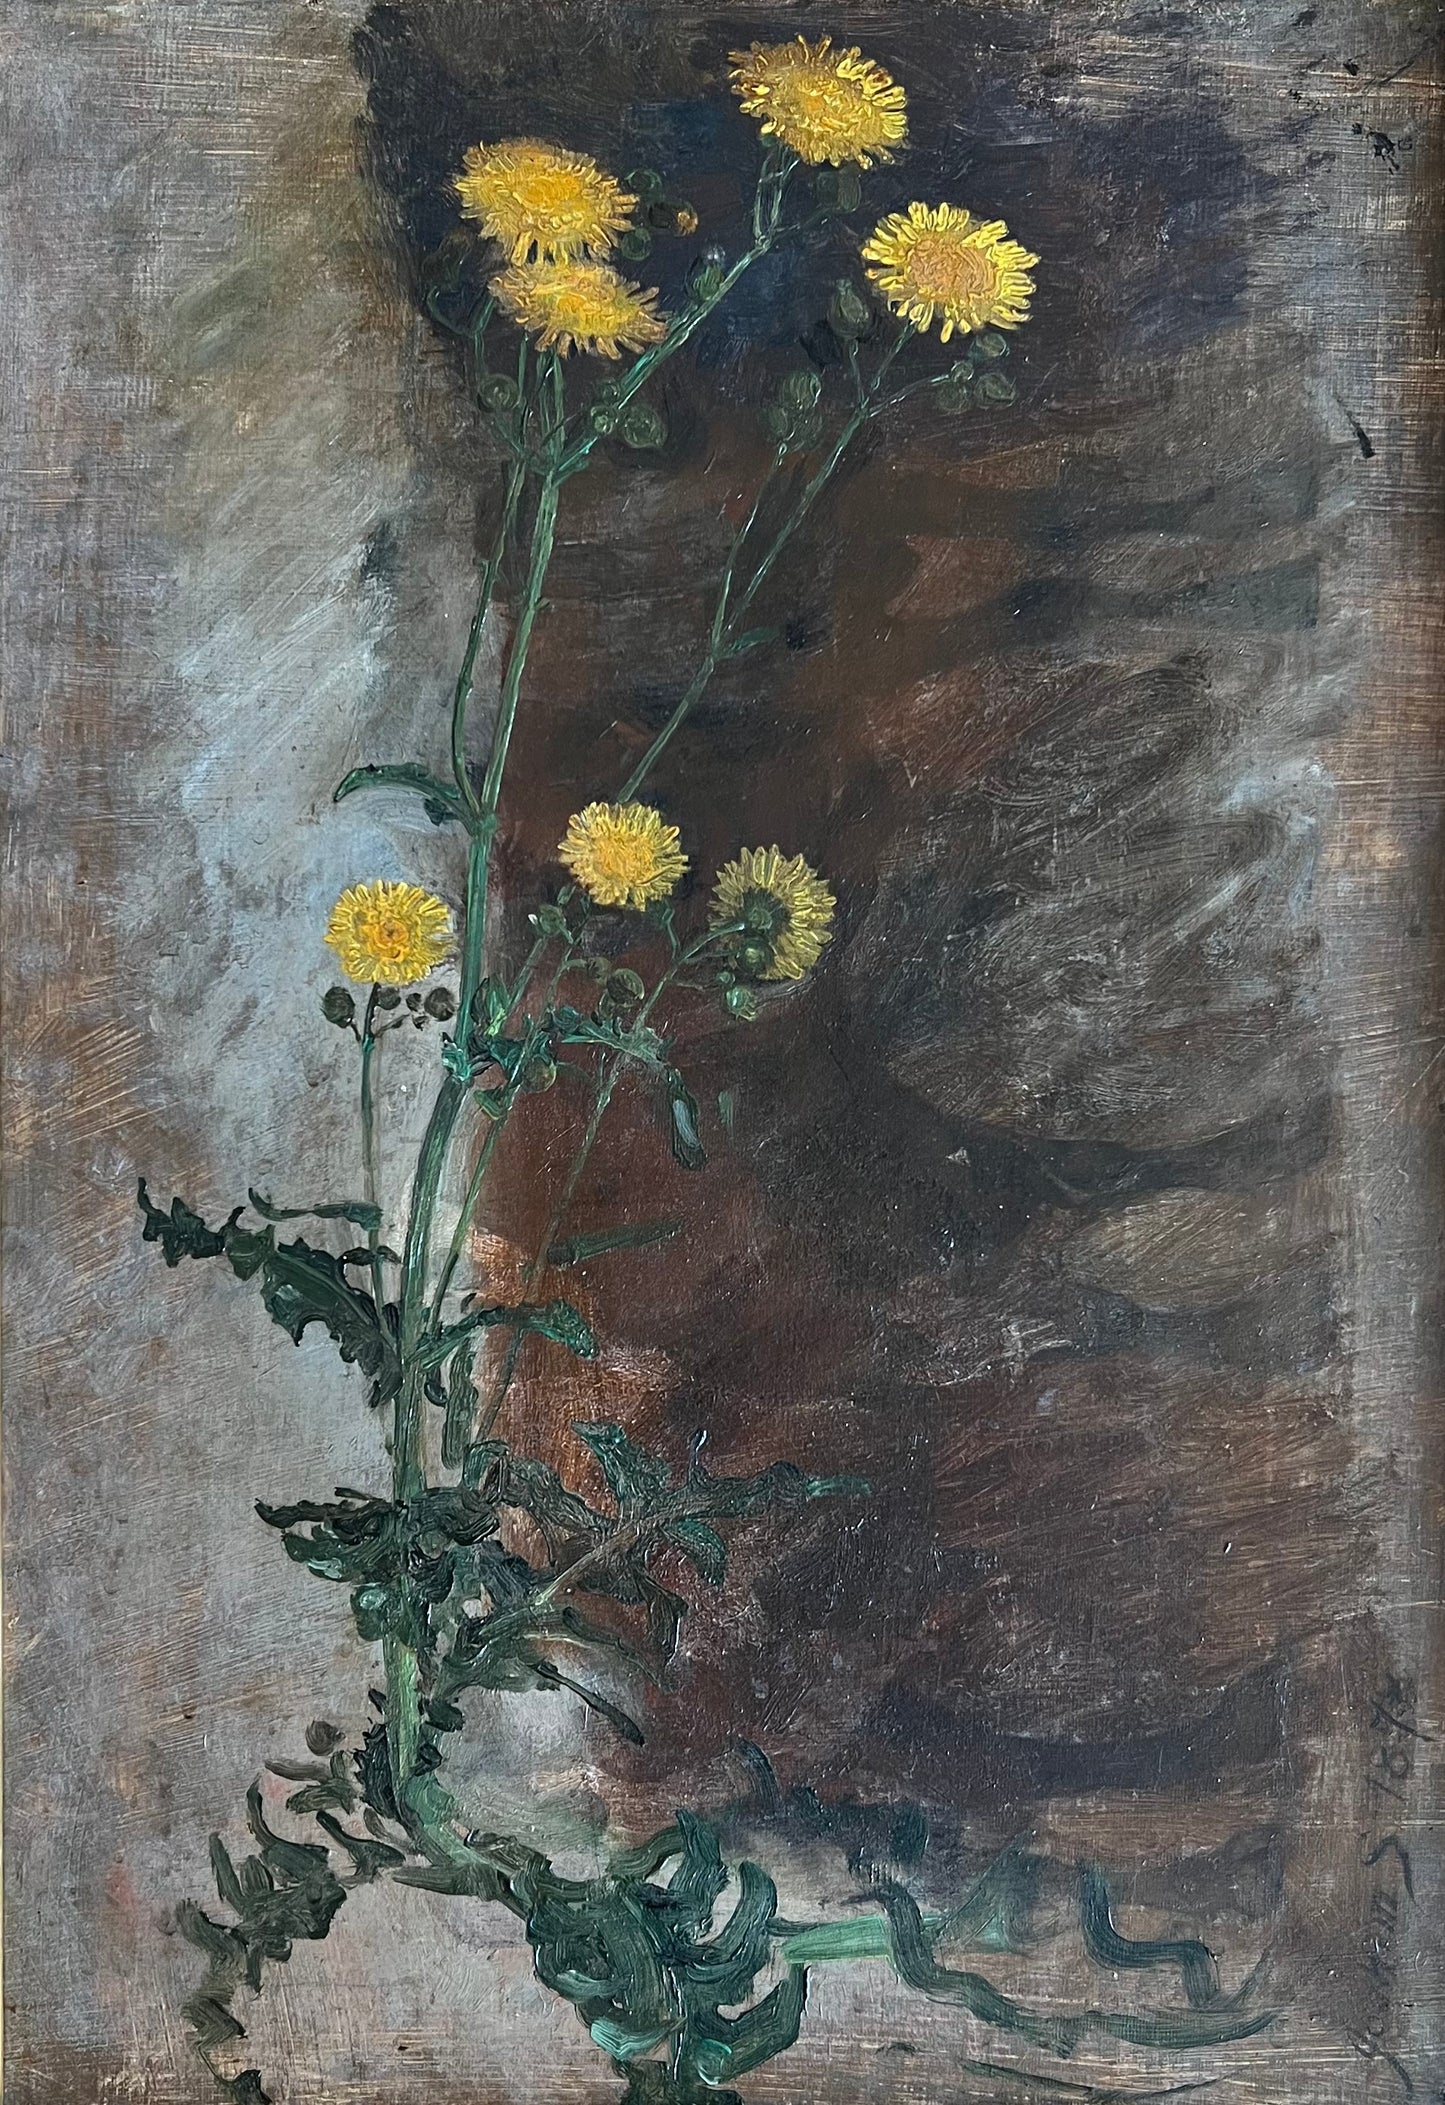 Joakim Skovgaard. “Blomstrende følfod”, 1878